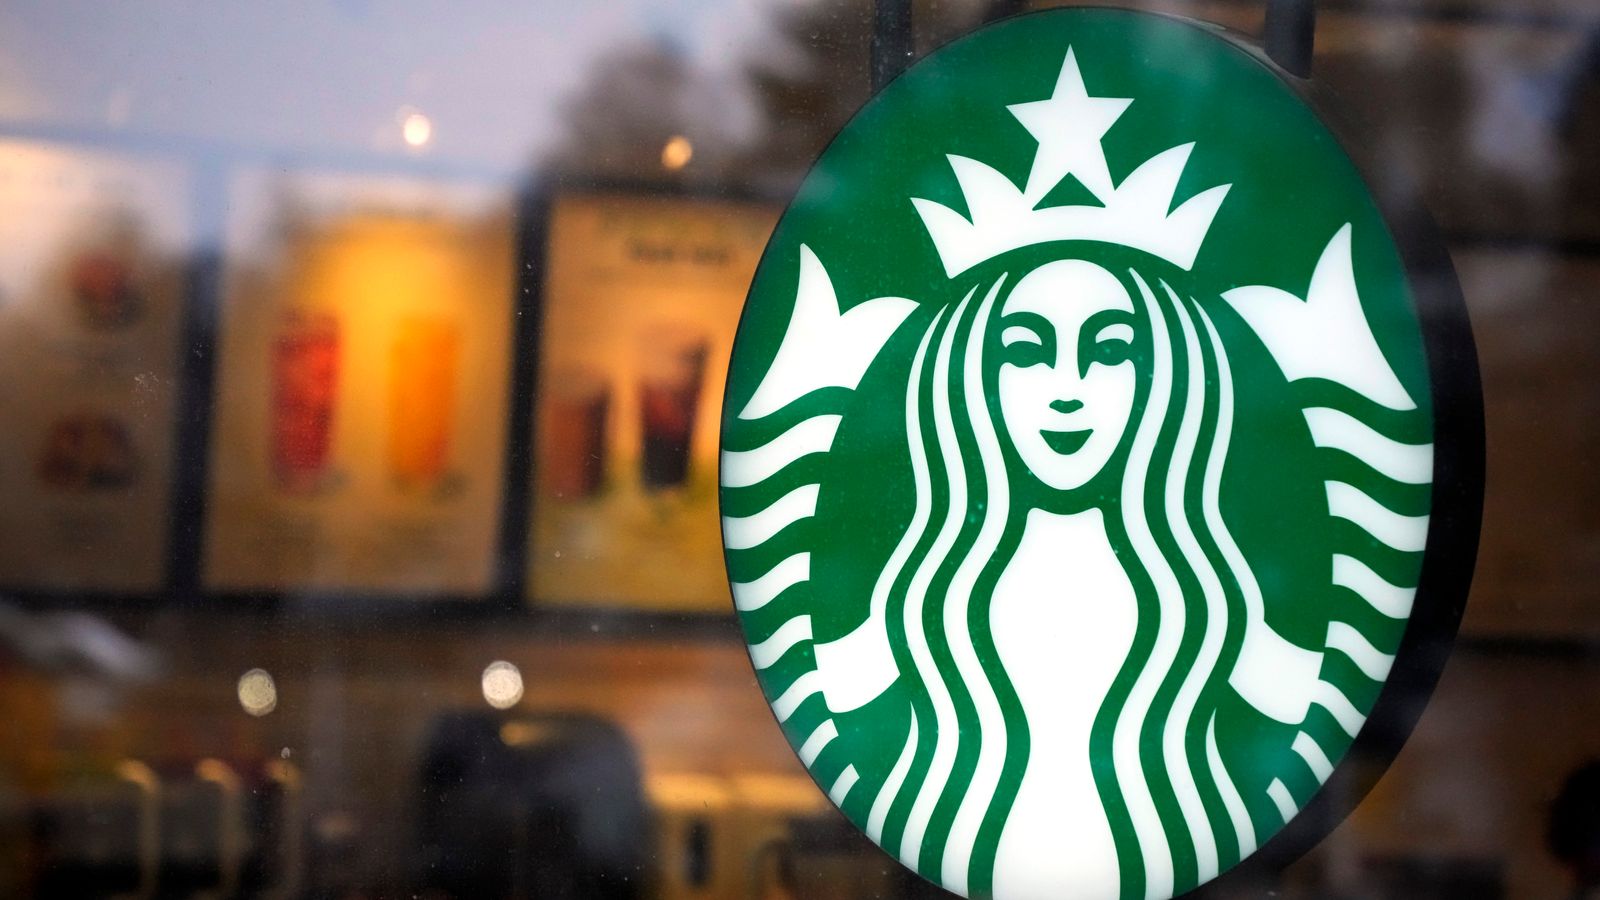 Boycott Impact: Starbucks Fails to Meet Market Expectations, Lowers Sales Forecast